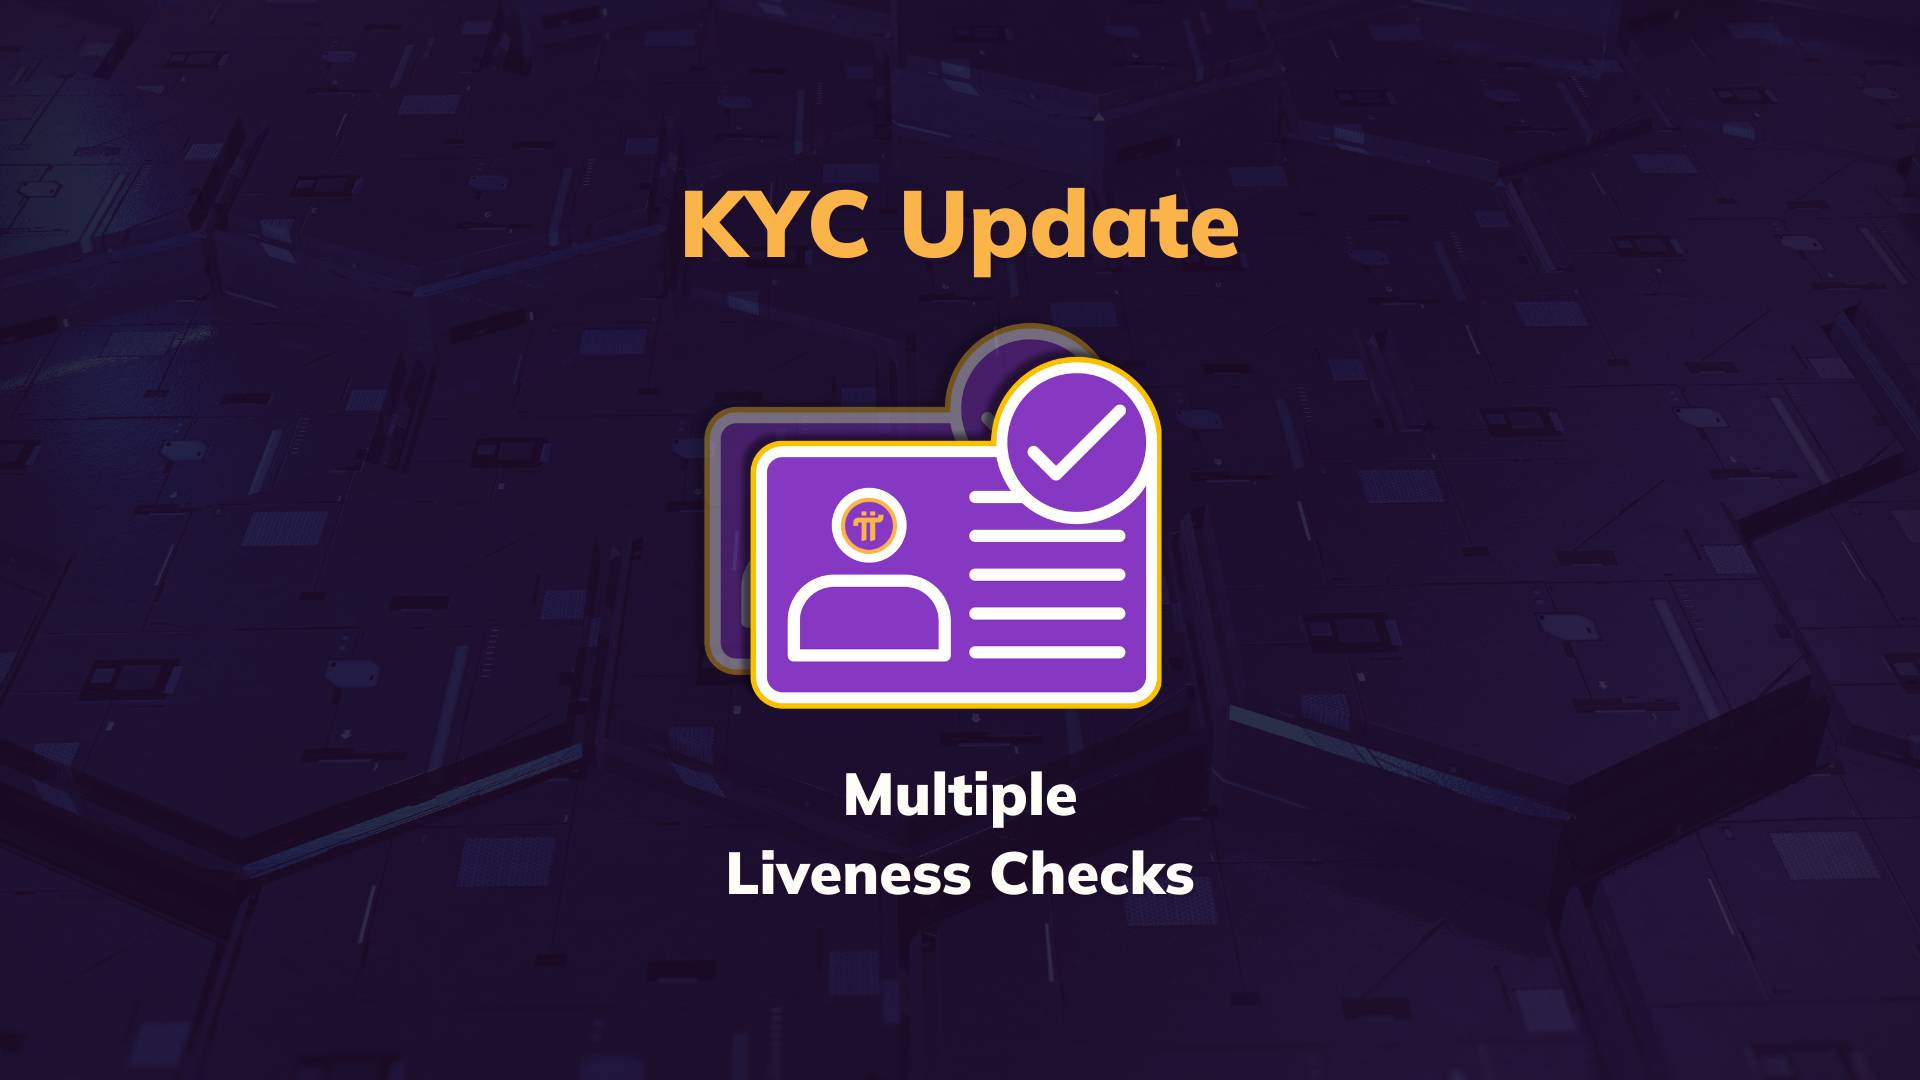 KYC Update: Additional Liveness Checks to Help Process Pioneers’ Tentative KYC!